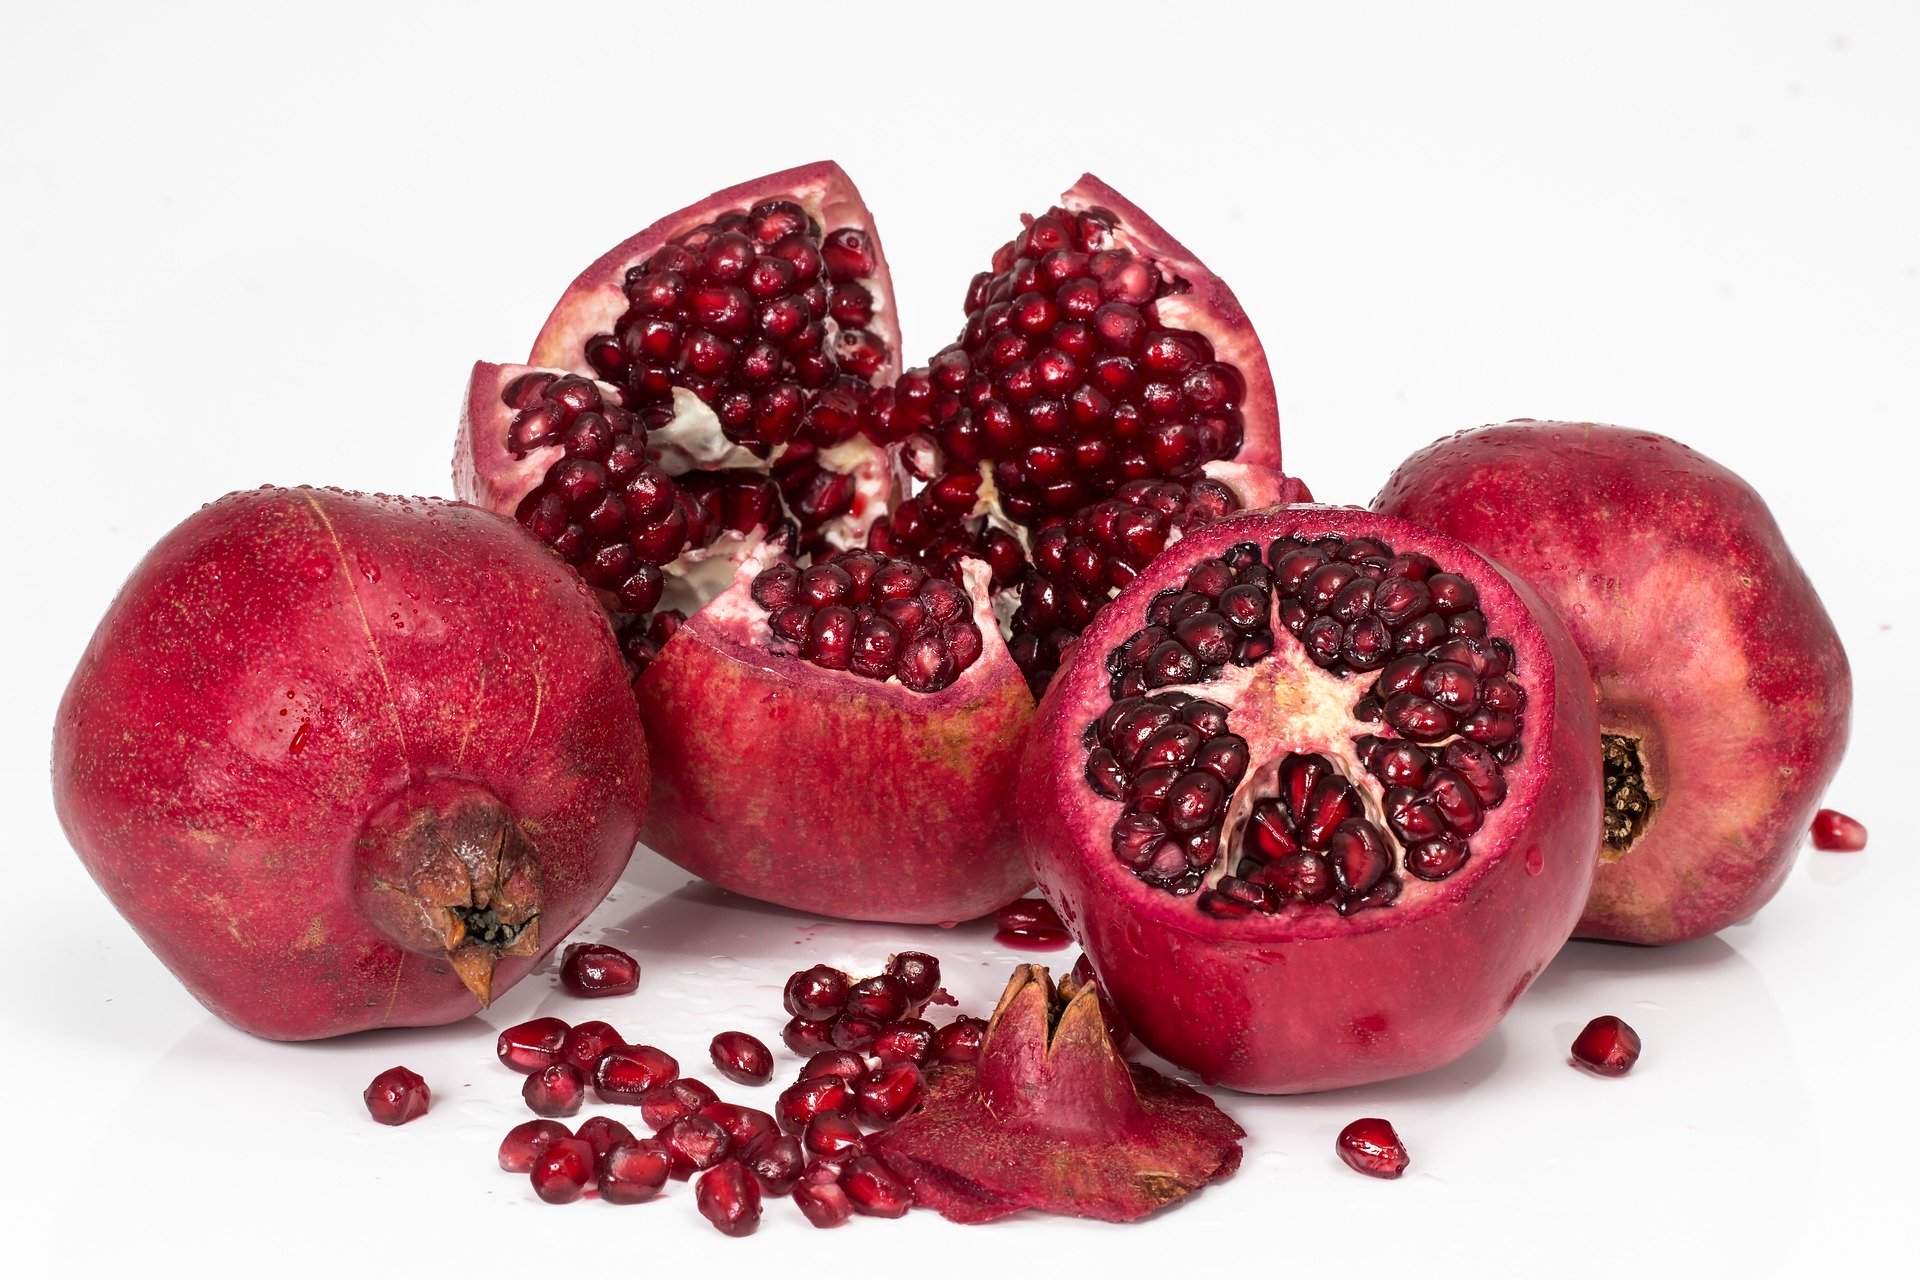 15 Proven Health Benefits of Pomegranate